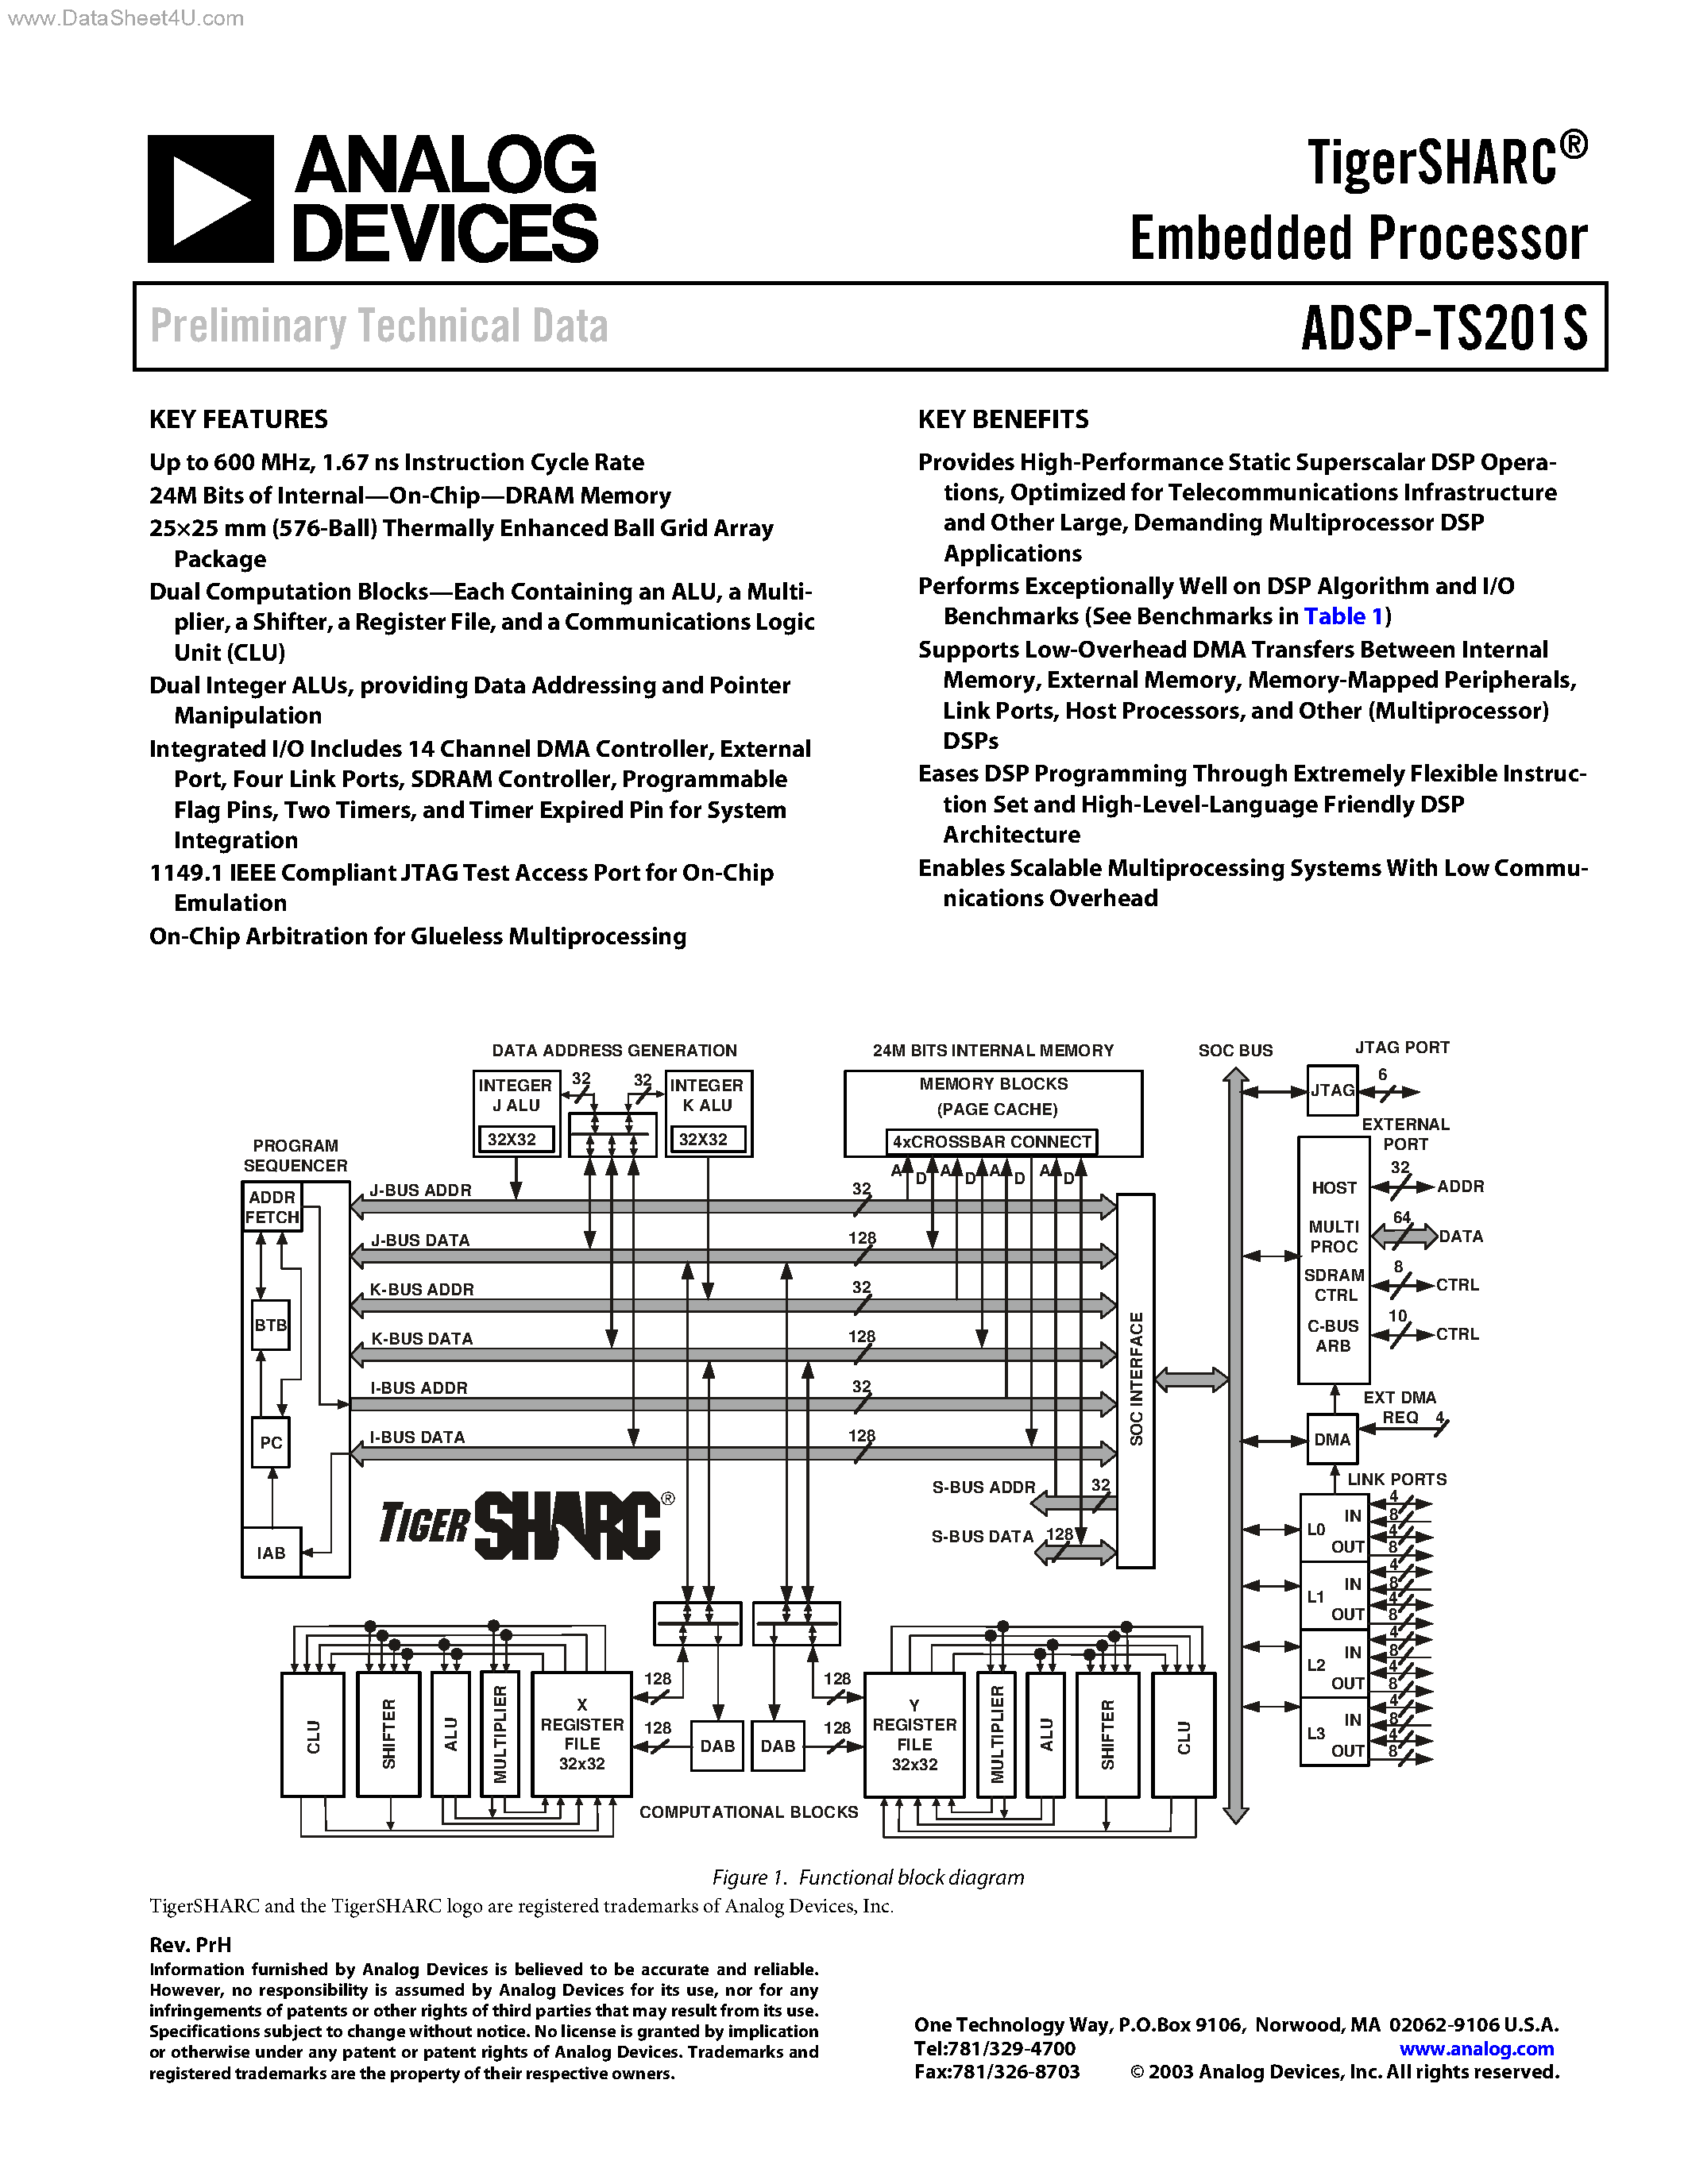 Datasheet ADSP-TS201S - TigerSHARC-R Embedded Processor page 1